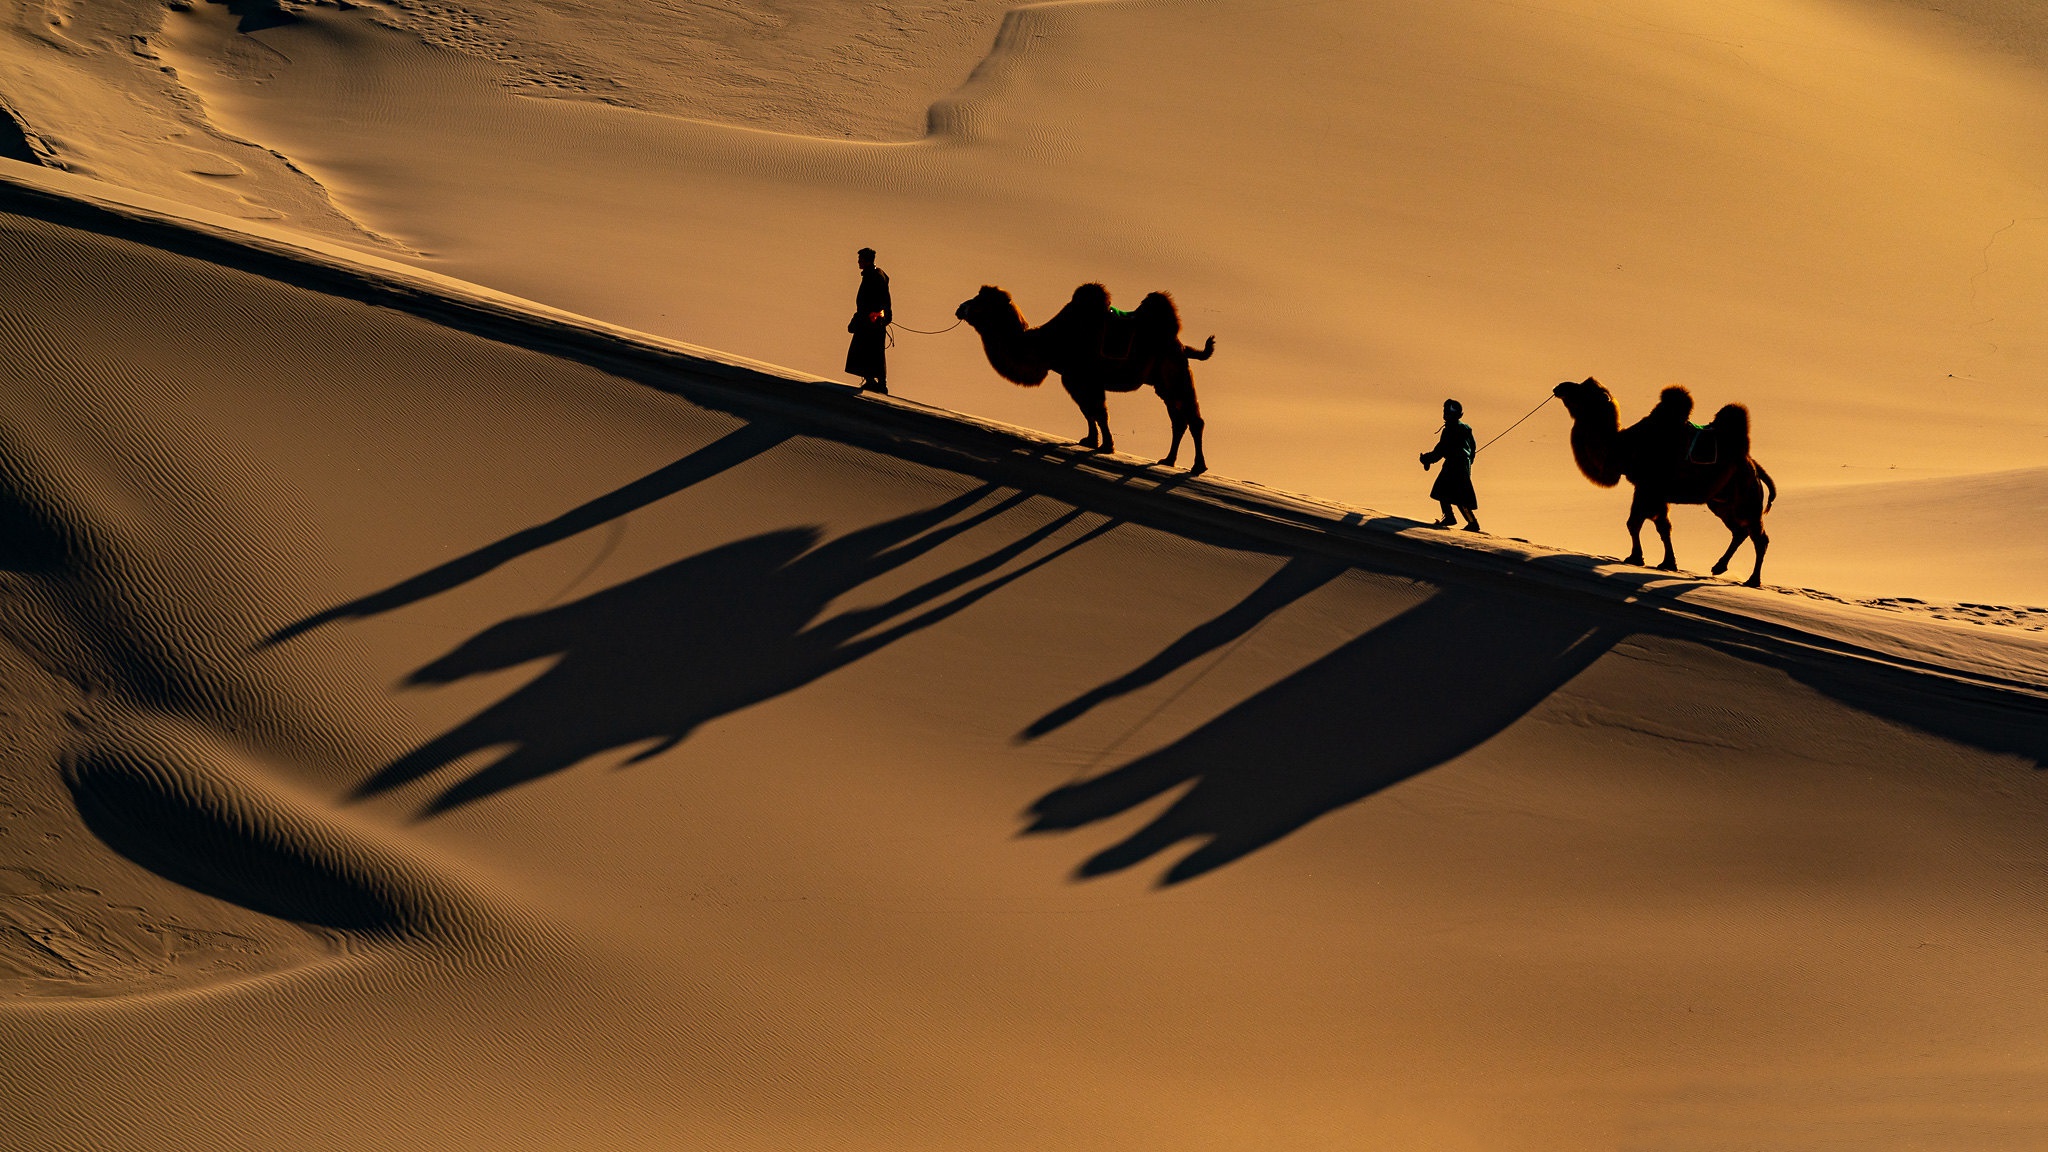 992021 descargar fondo de pantalla fotografía, caravana, caravana de camellos, camello, desierto, celebridad: protectores de pantalla e imágenes gratis